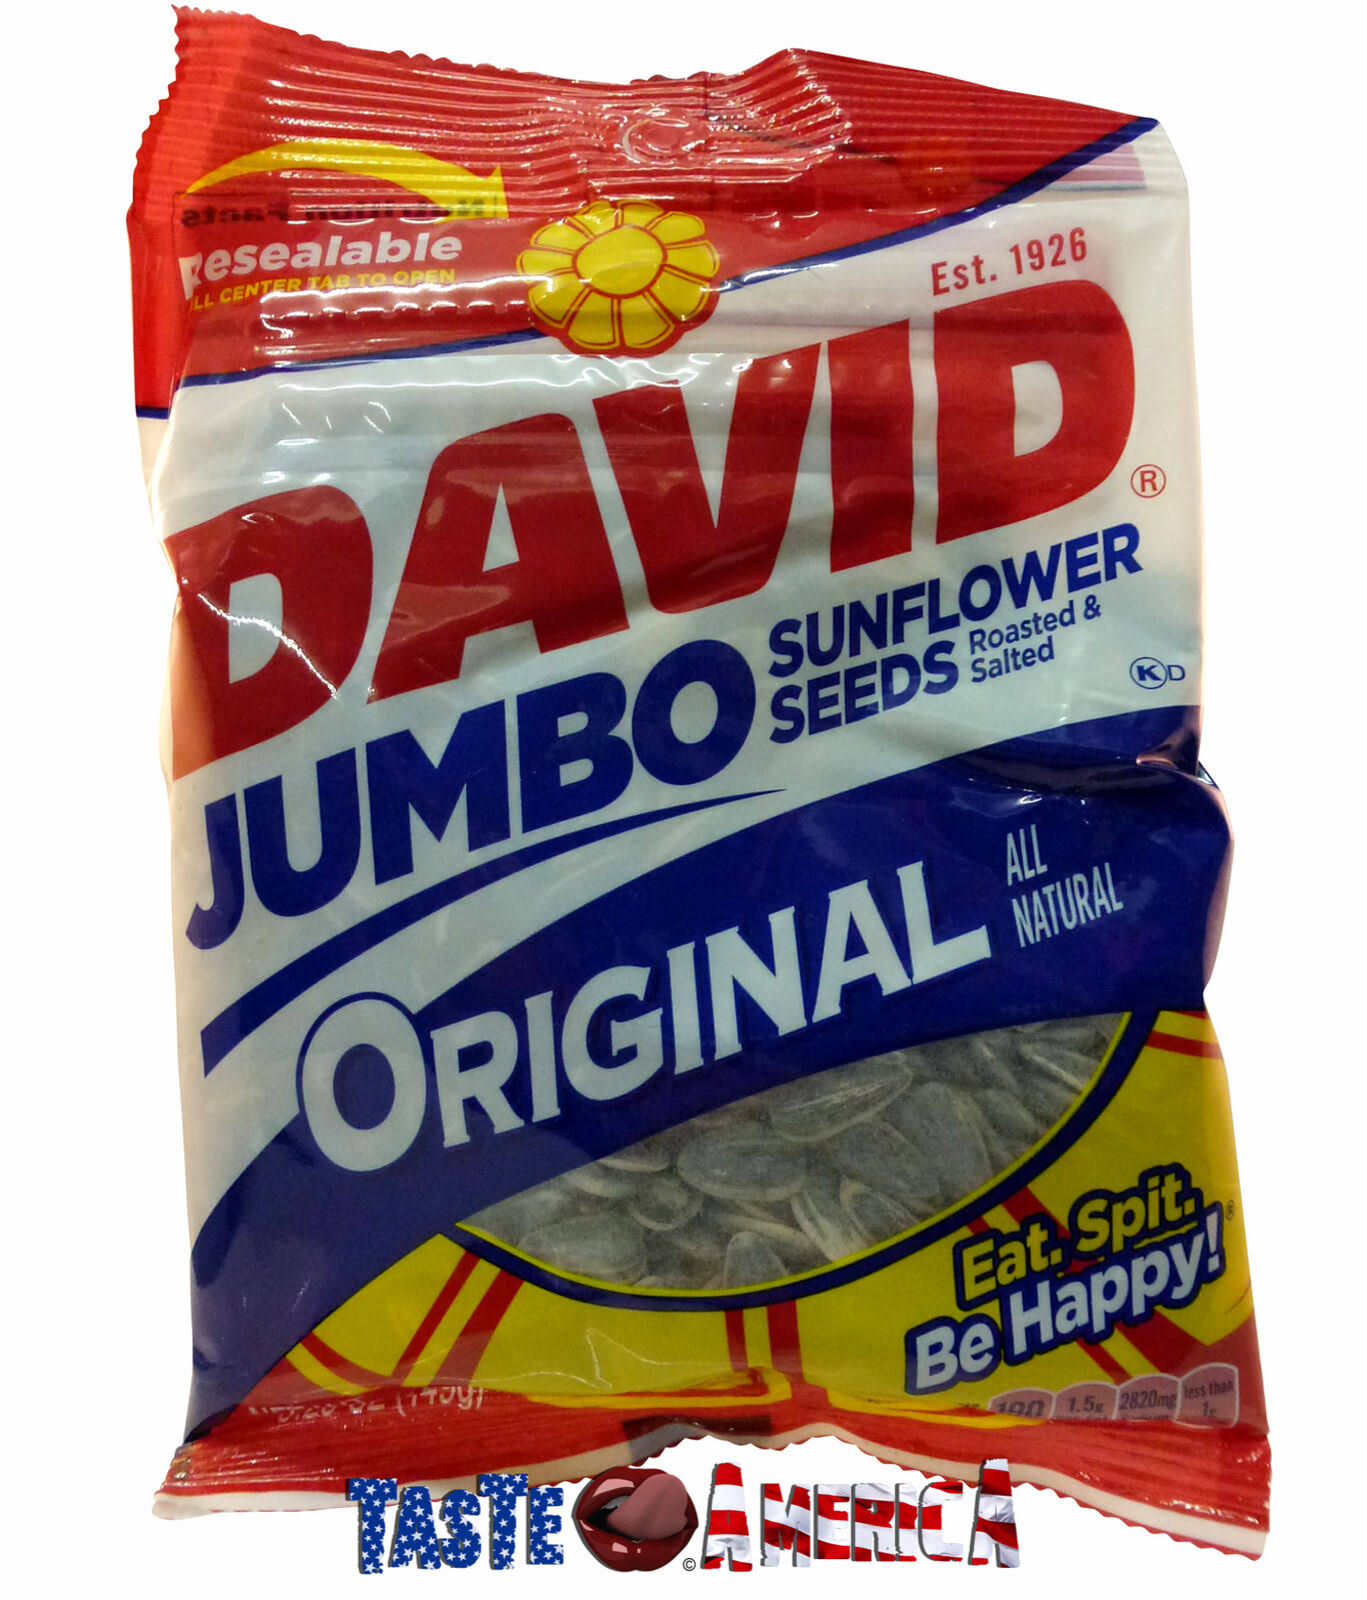 David Jumbo Sunflower Seeds - Original, 5.25oz